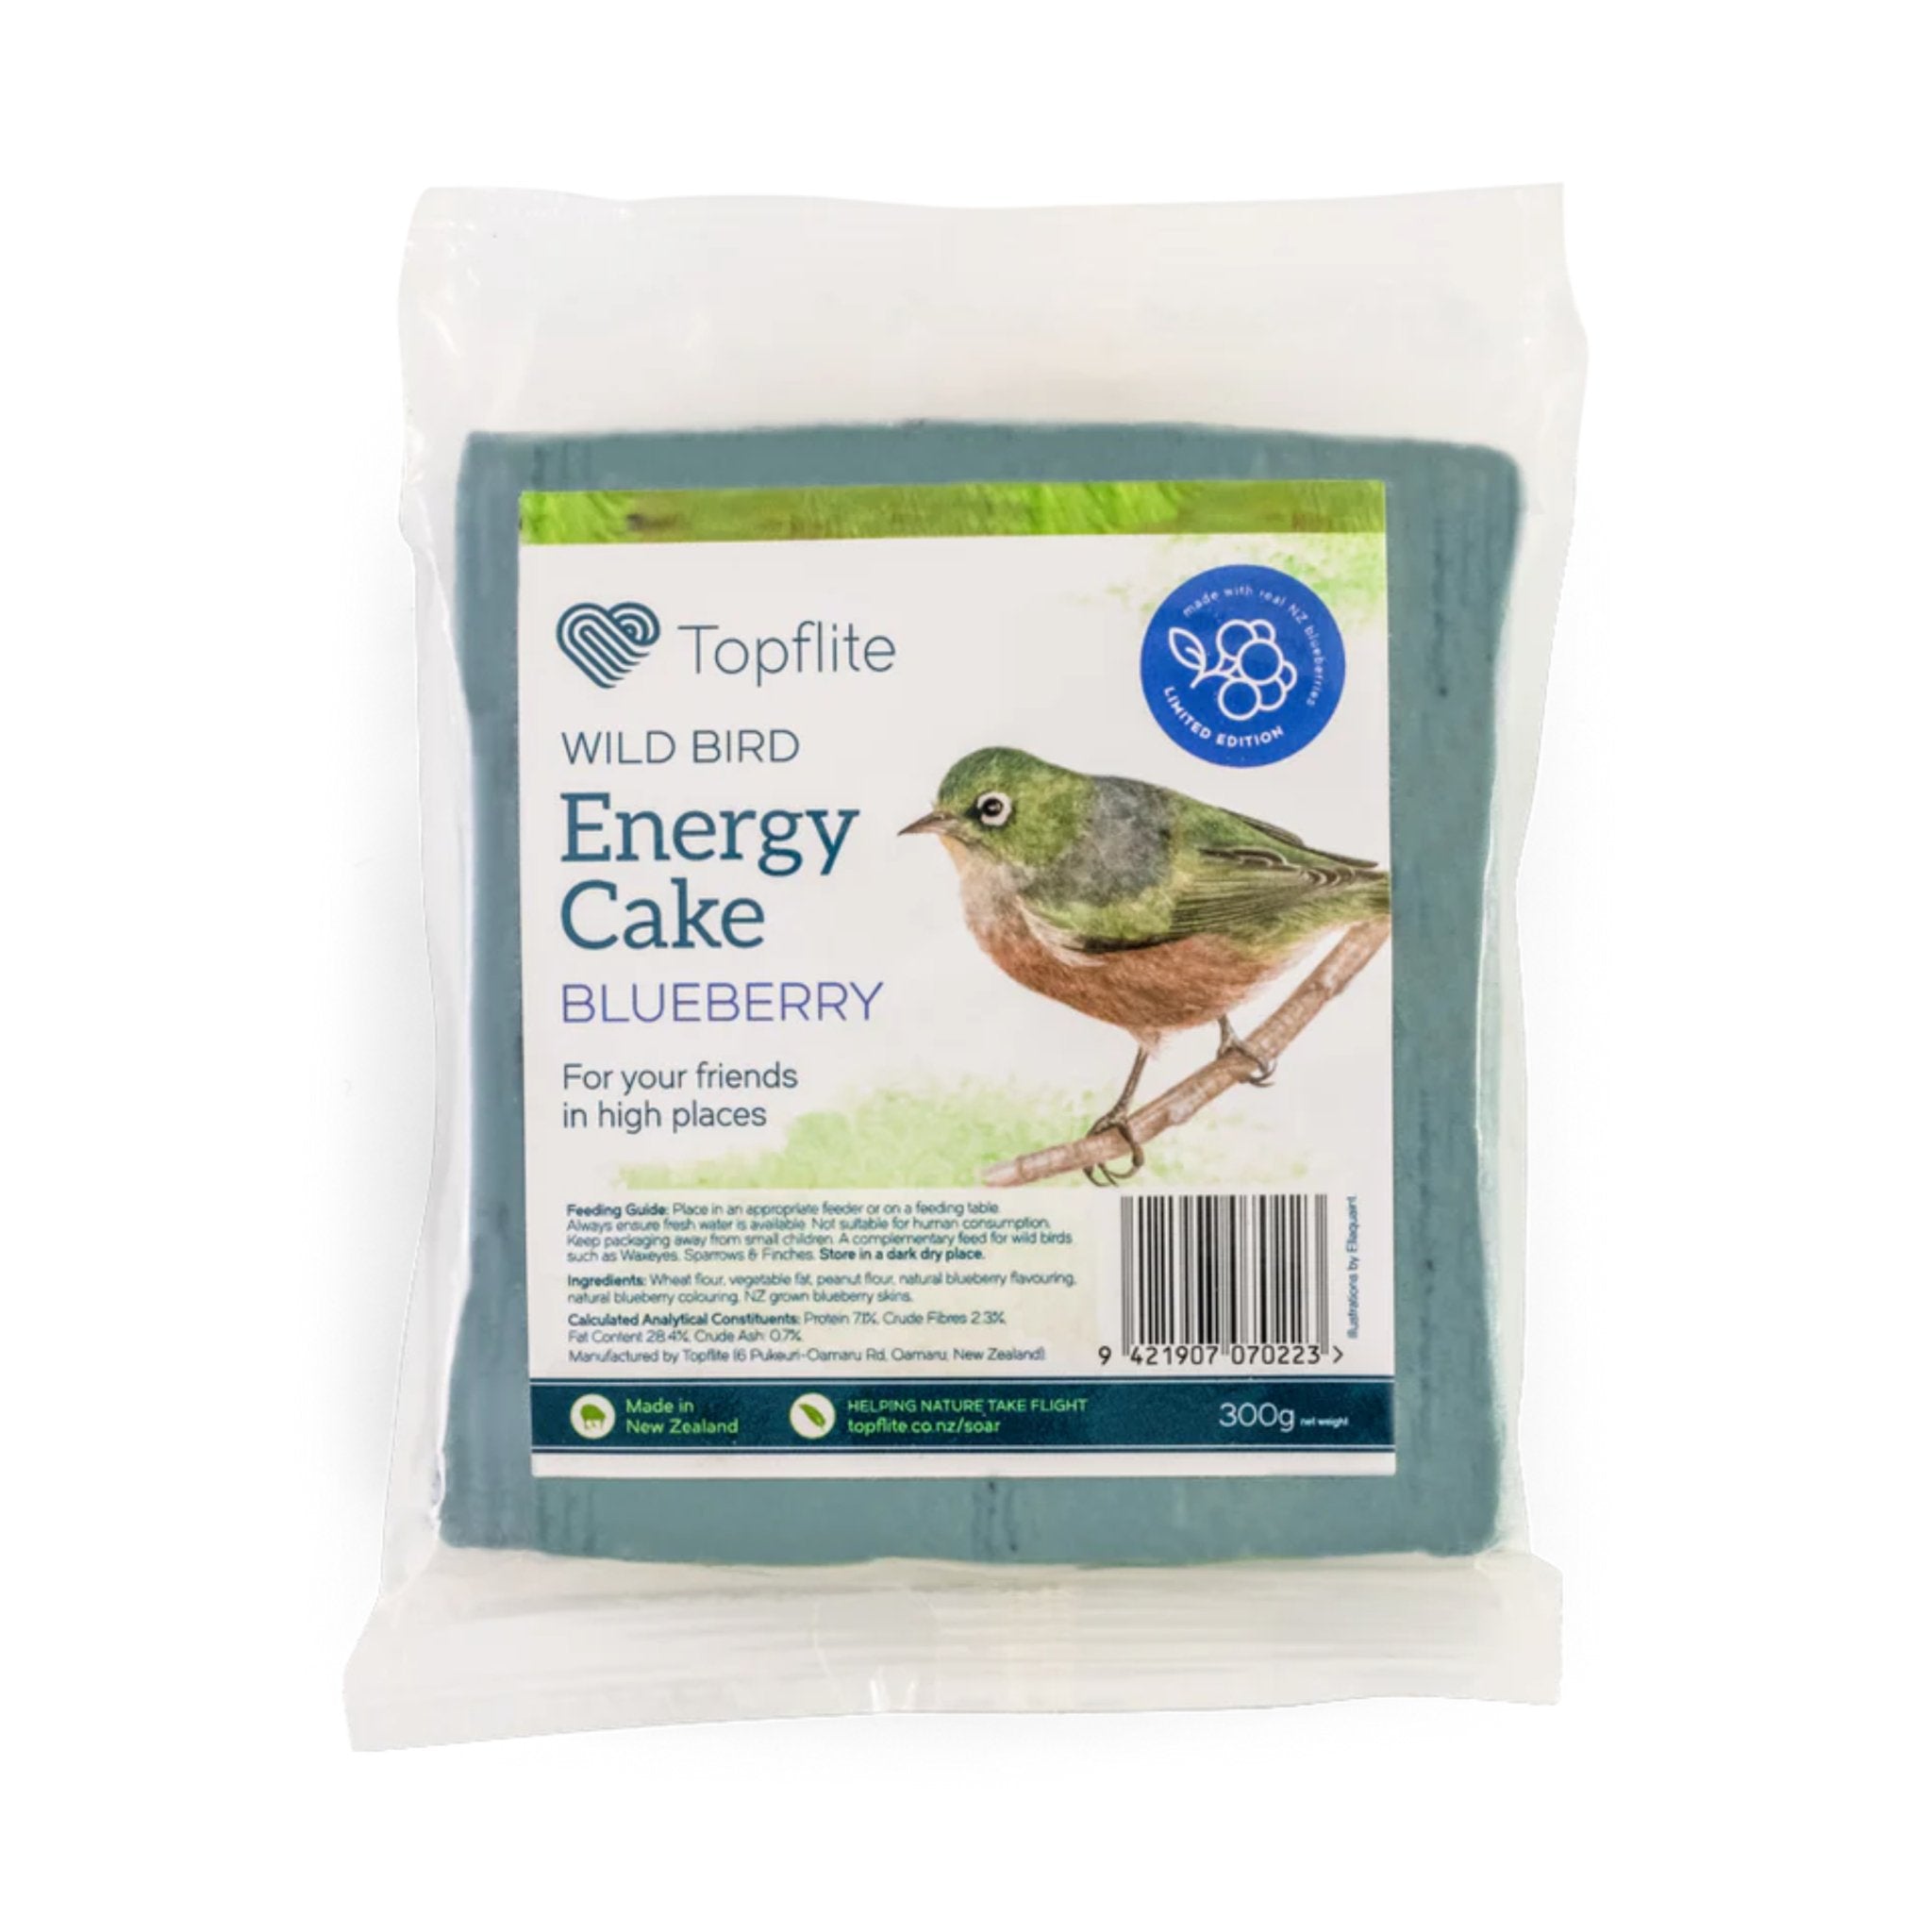 Topflite - Wild Bird Blueberry Energy Cake - The Flower Crate